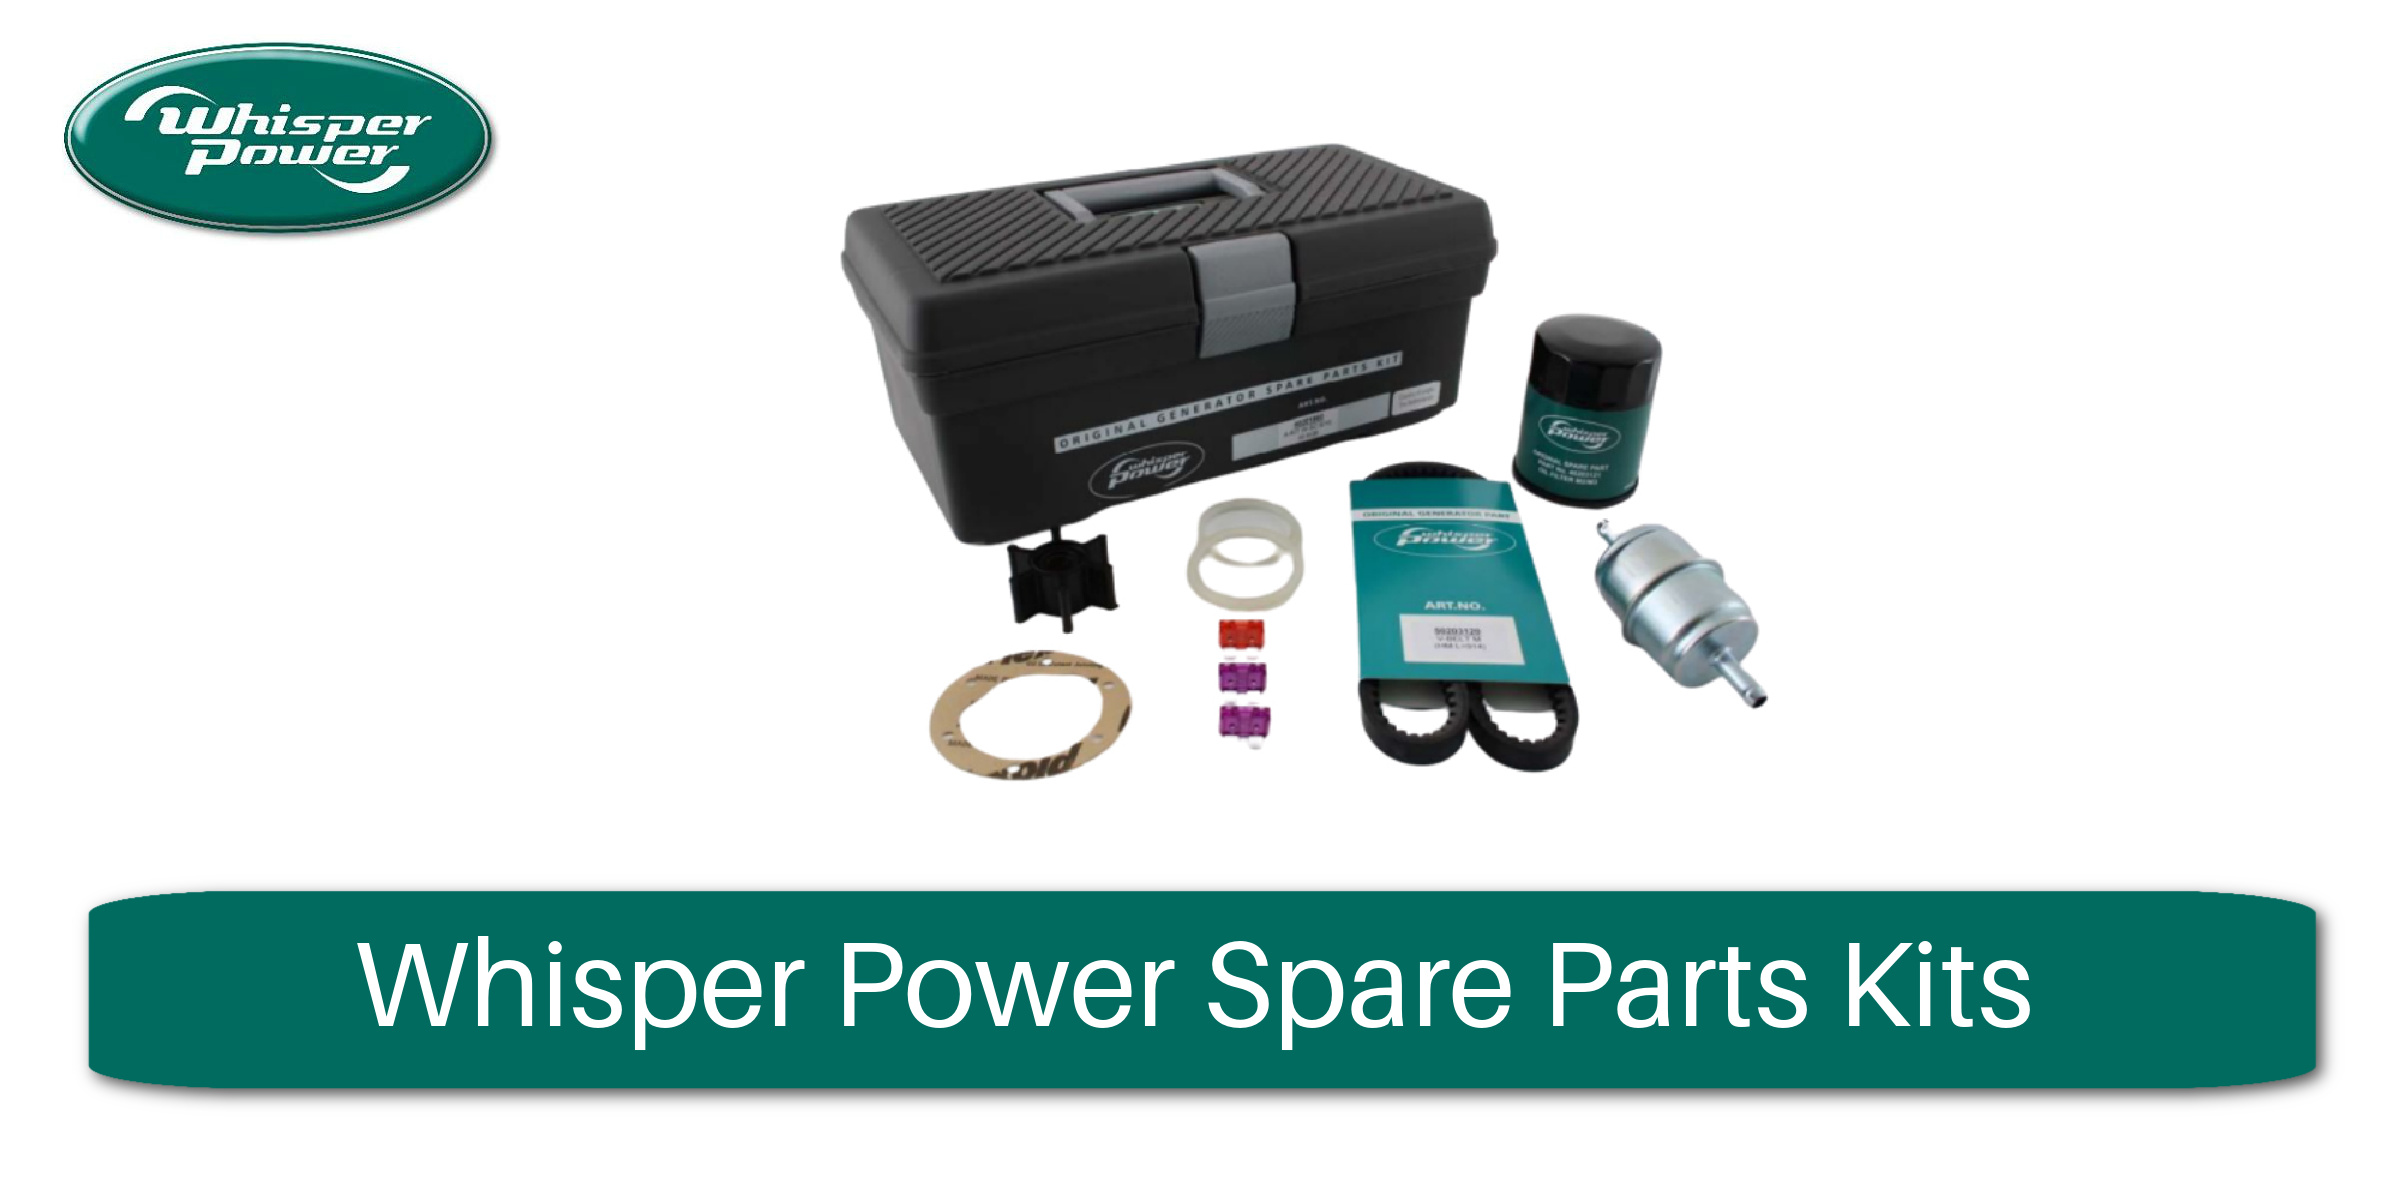 Whisper Power Spare Parts Kits